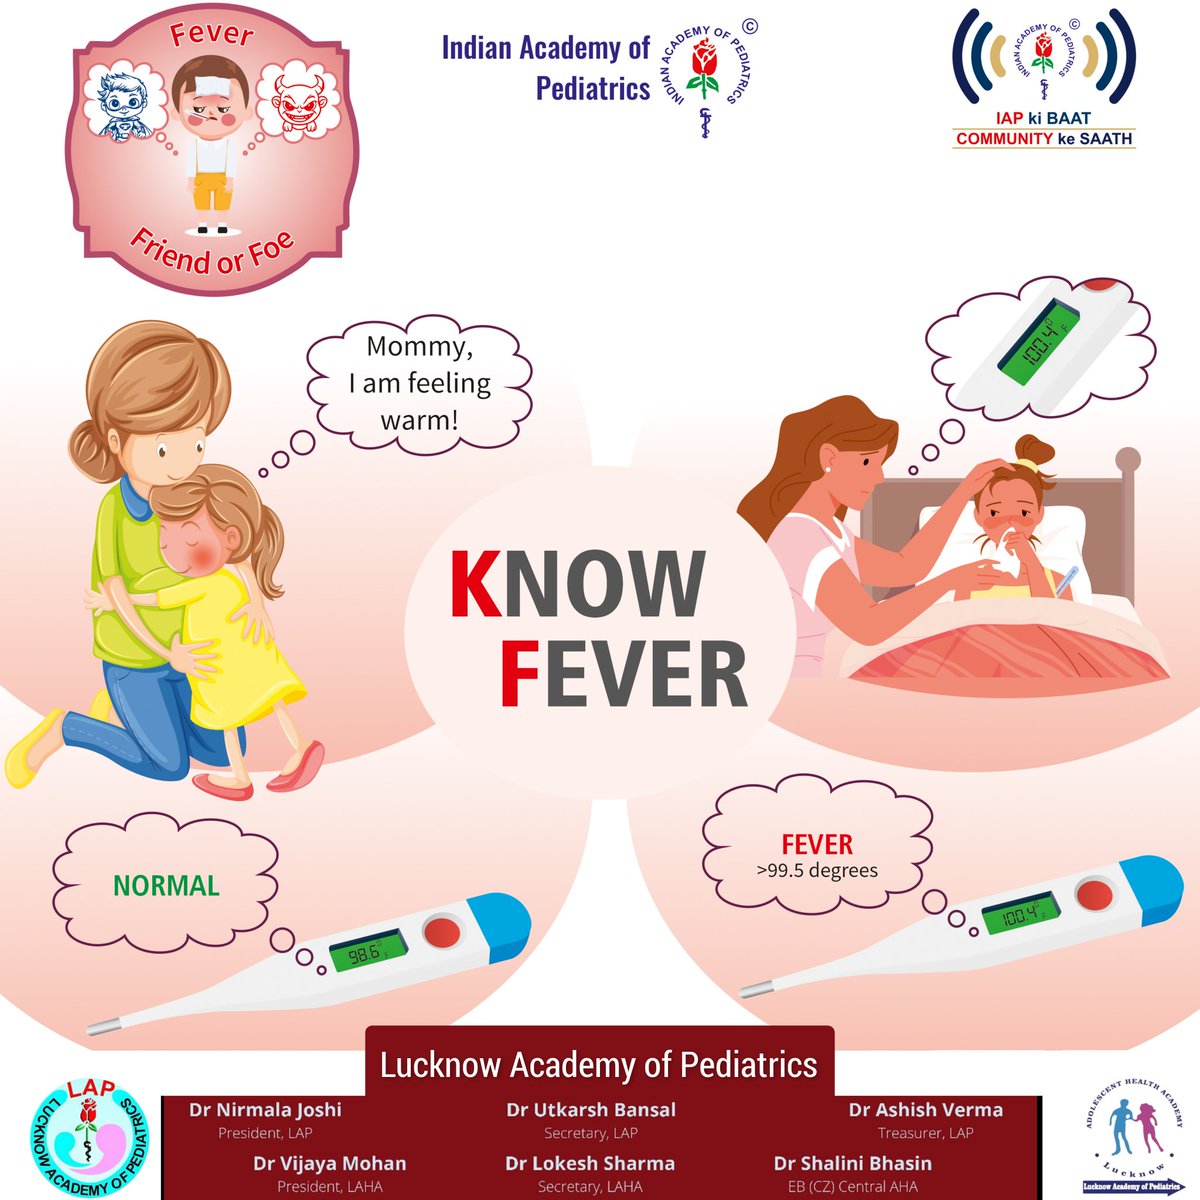 Fever: Friend or Foe #LAP #IAP #IAPlucknow #LAHA #AHA #lucknowacademyofpediatrics #LNF #NNF #IAPkiBaatCOMMUNITYkeSaath #Fever #FeverWarrior #FeverAwareness #FeverKnowledge #FeverFighter #ChildHealth #Health #thermometer #checkfever @DrYogeshparikh @IPAWorldorg @AdolHealthIAP